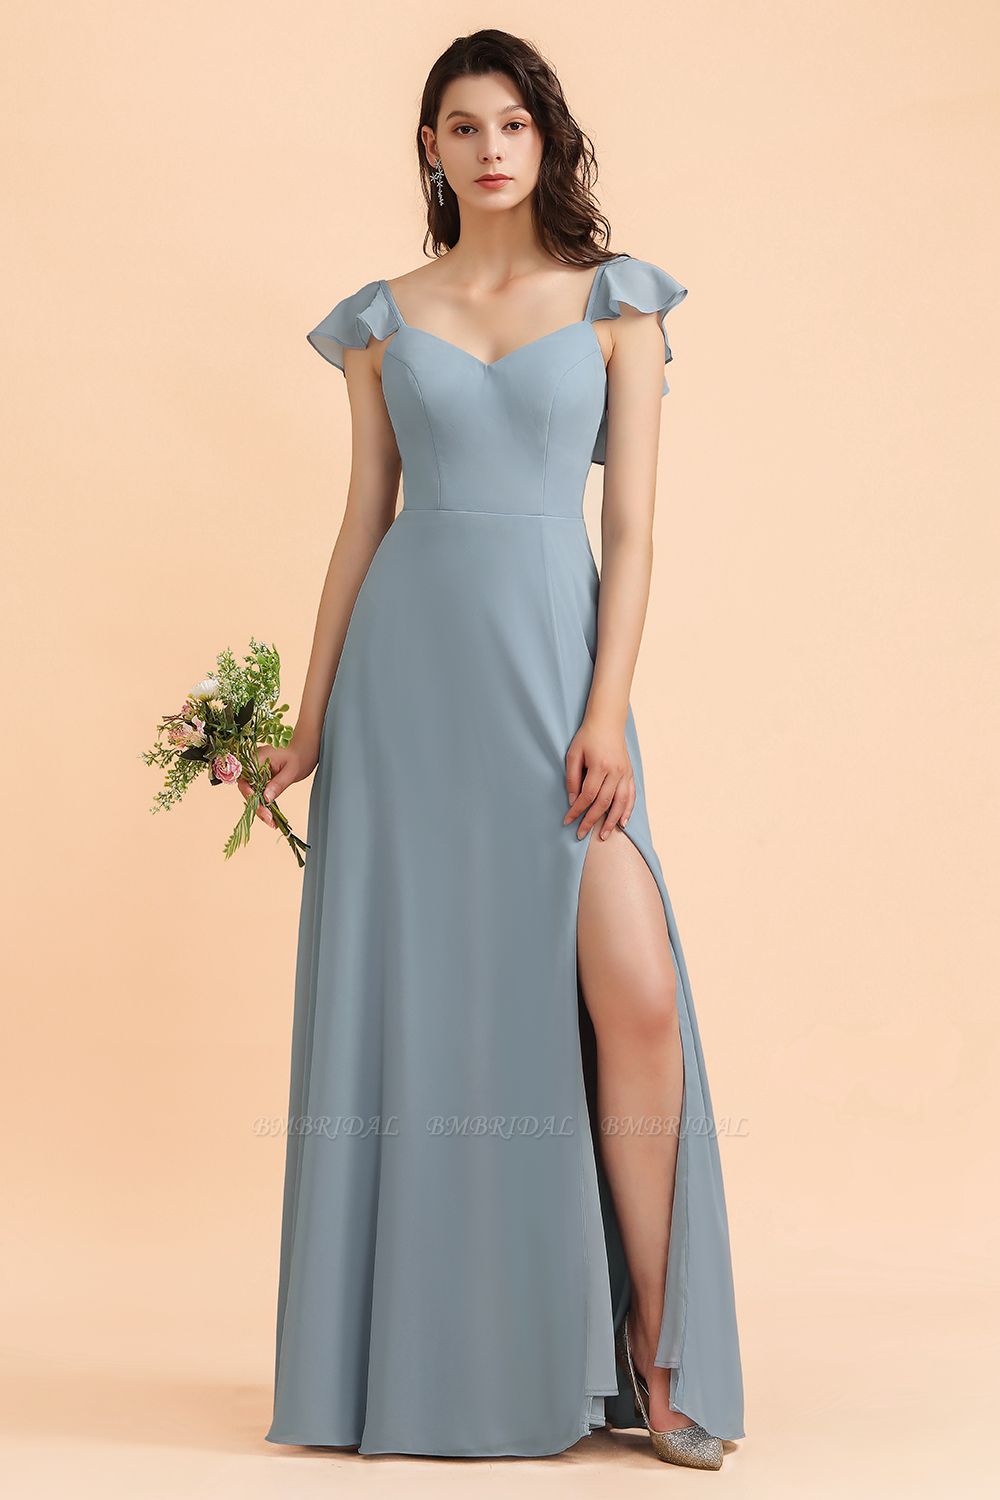 BMbridal Fashion Dusty Blue Chiffon Sweetheart Slit Bridesmaid Dress with Ruffles Online